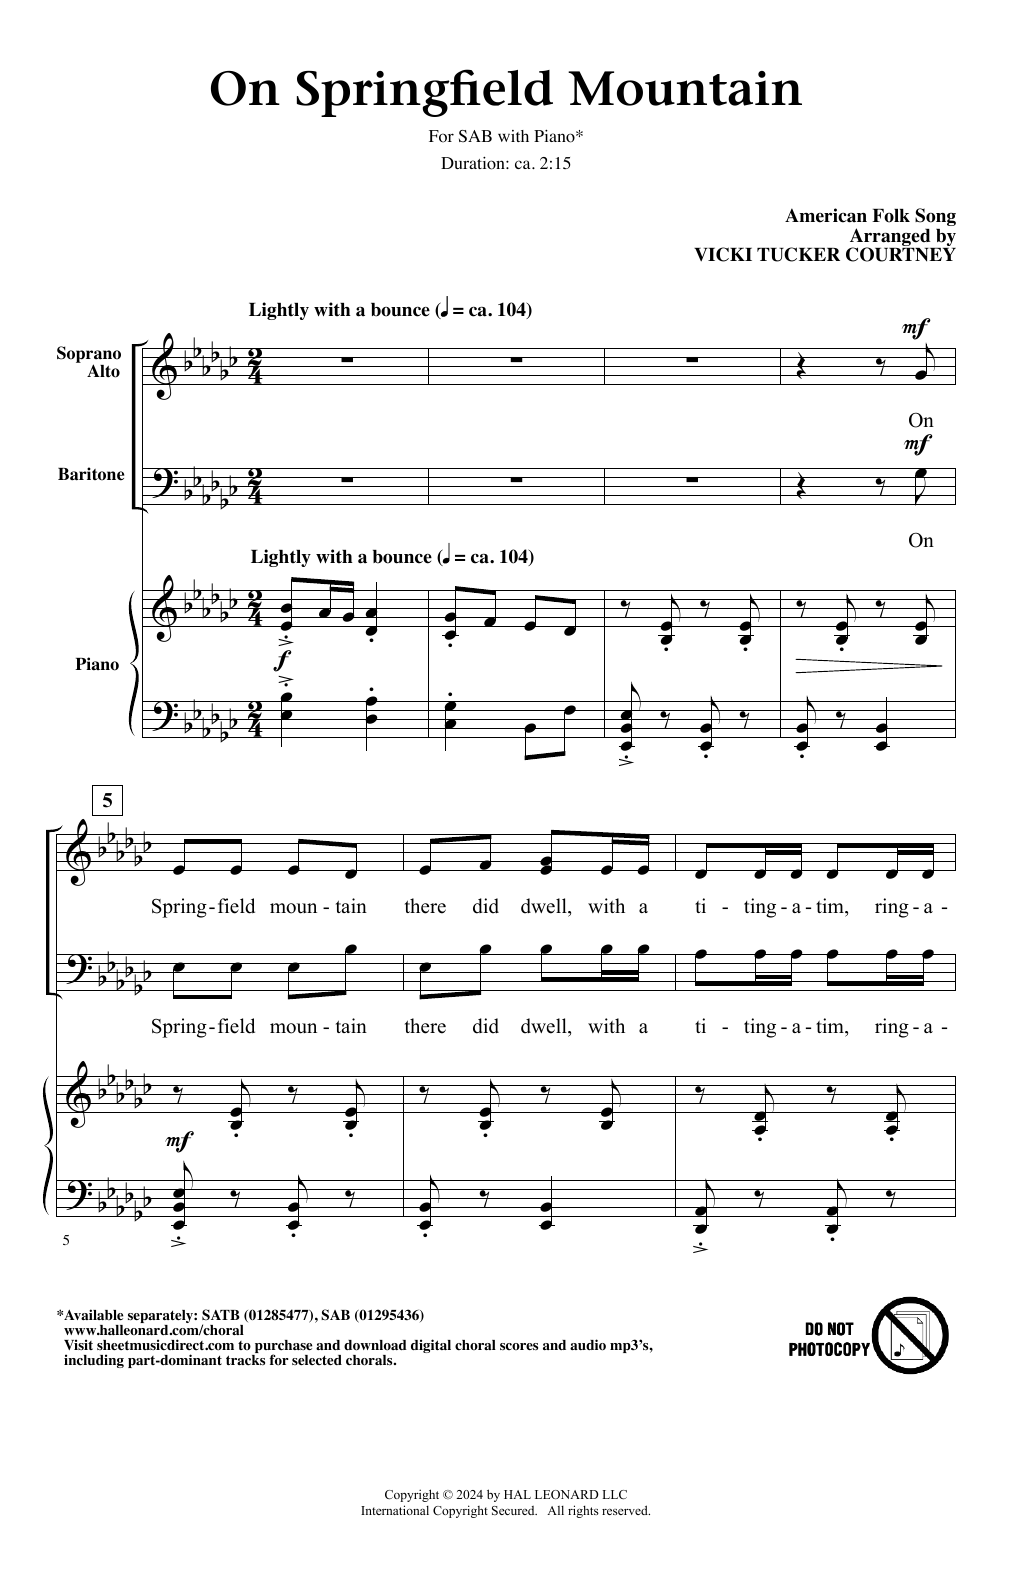 American Folk Song On Springfield Mountain (arr. Vicki Tucker Courtney) sheet music notes printable PDF score